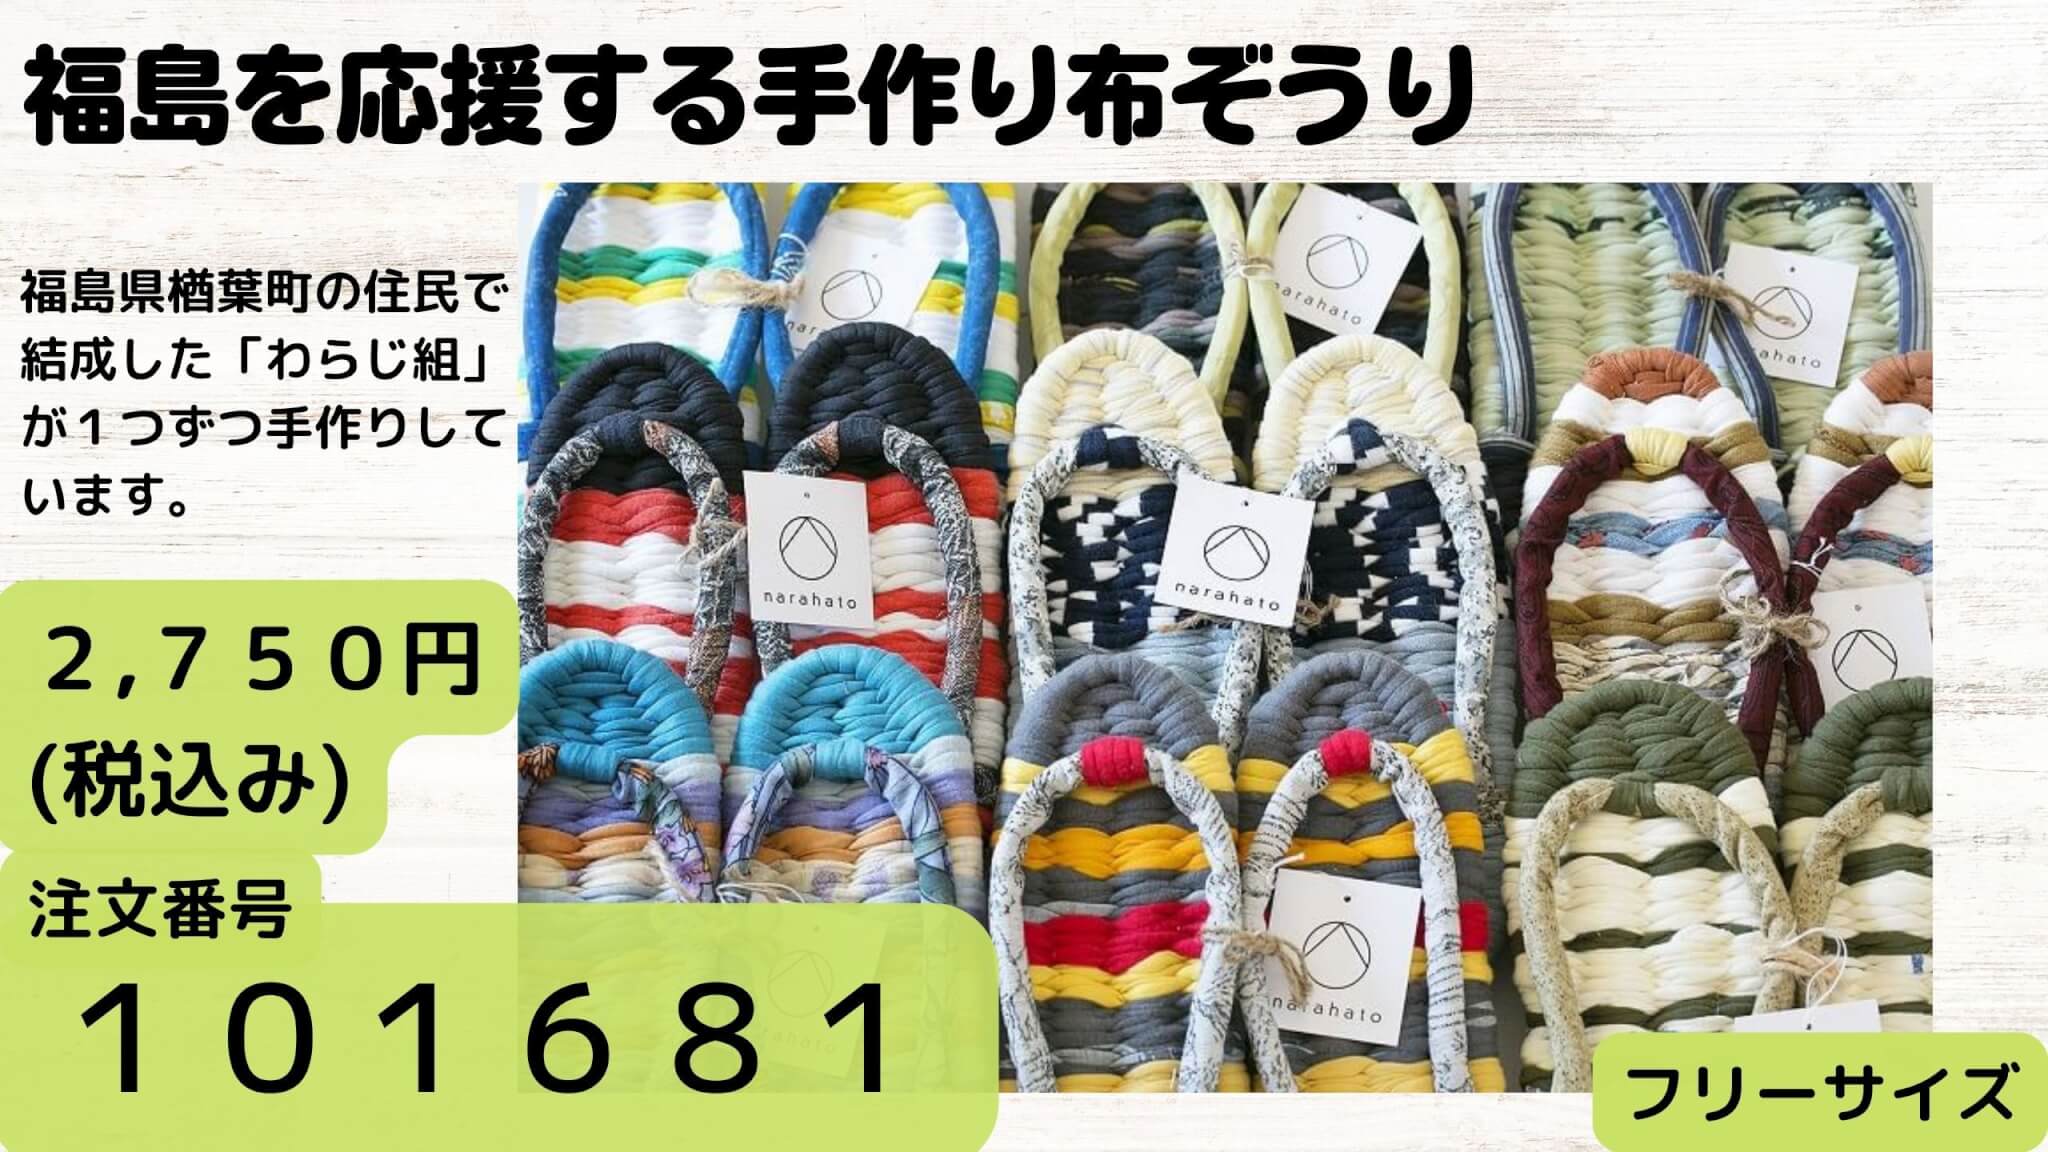 【3.11week限定】福島を応援する布ぞうりを販売します！